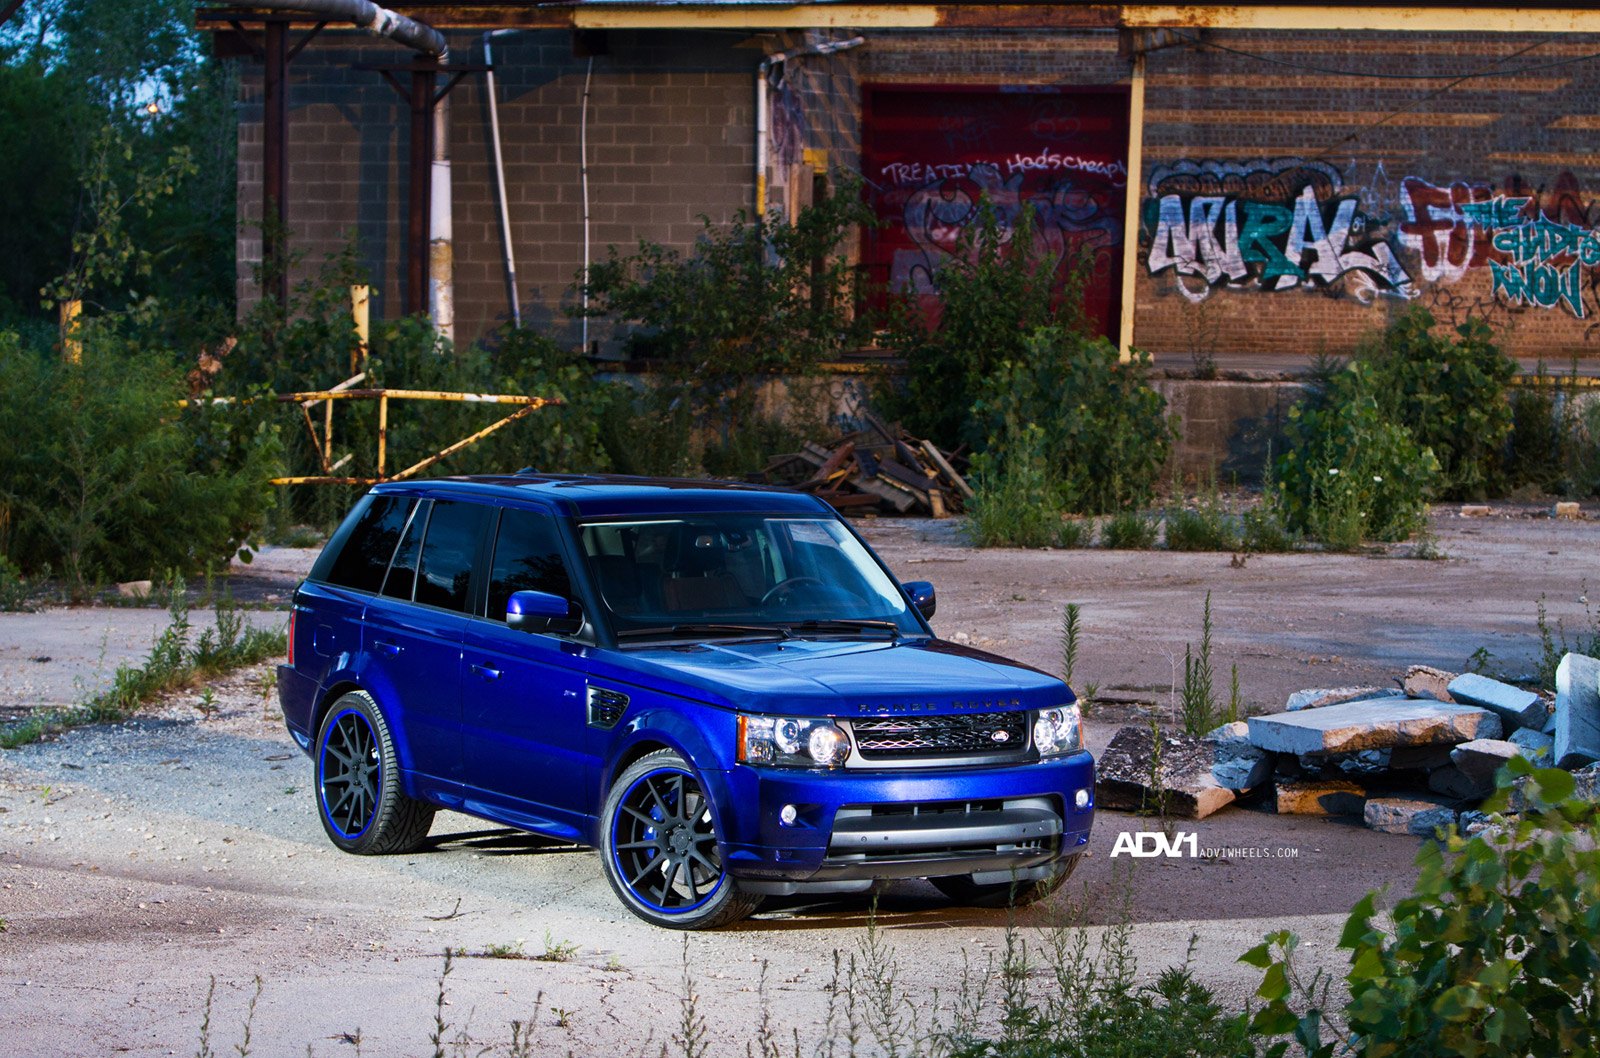 Matte Black ADV1 Wheels on Blue Range Rover Sport - Photo by ADV.1